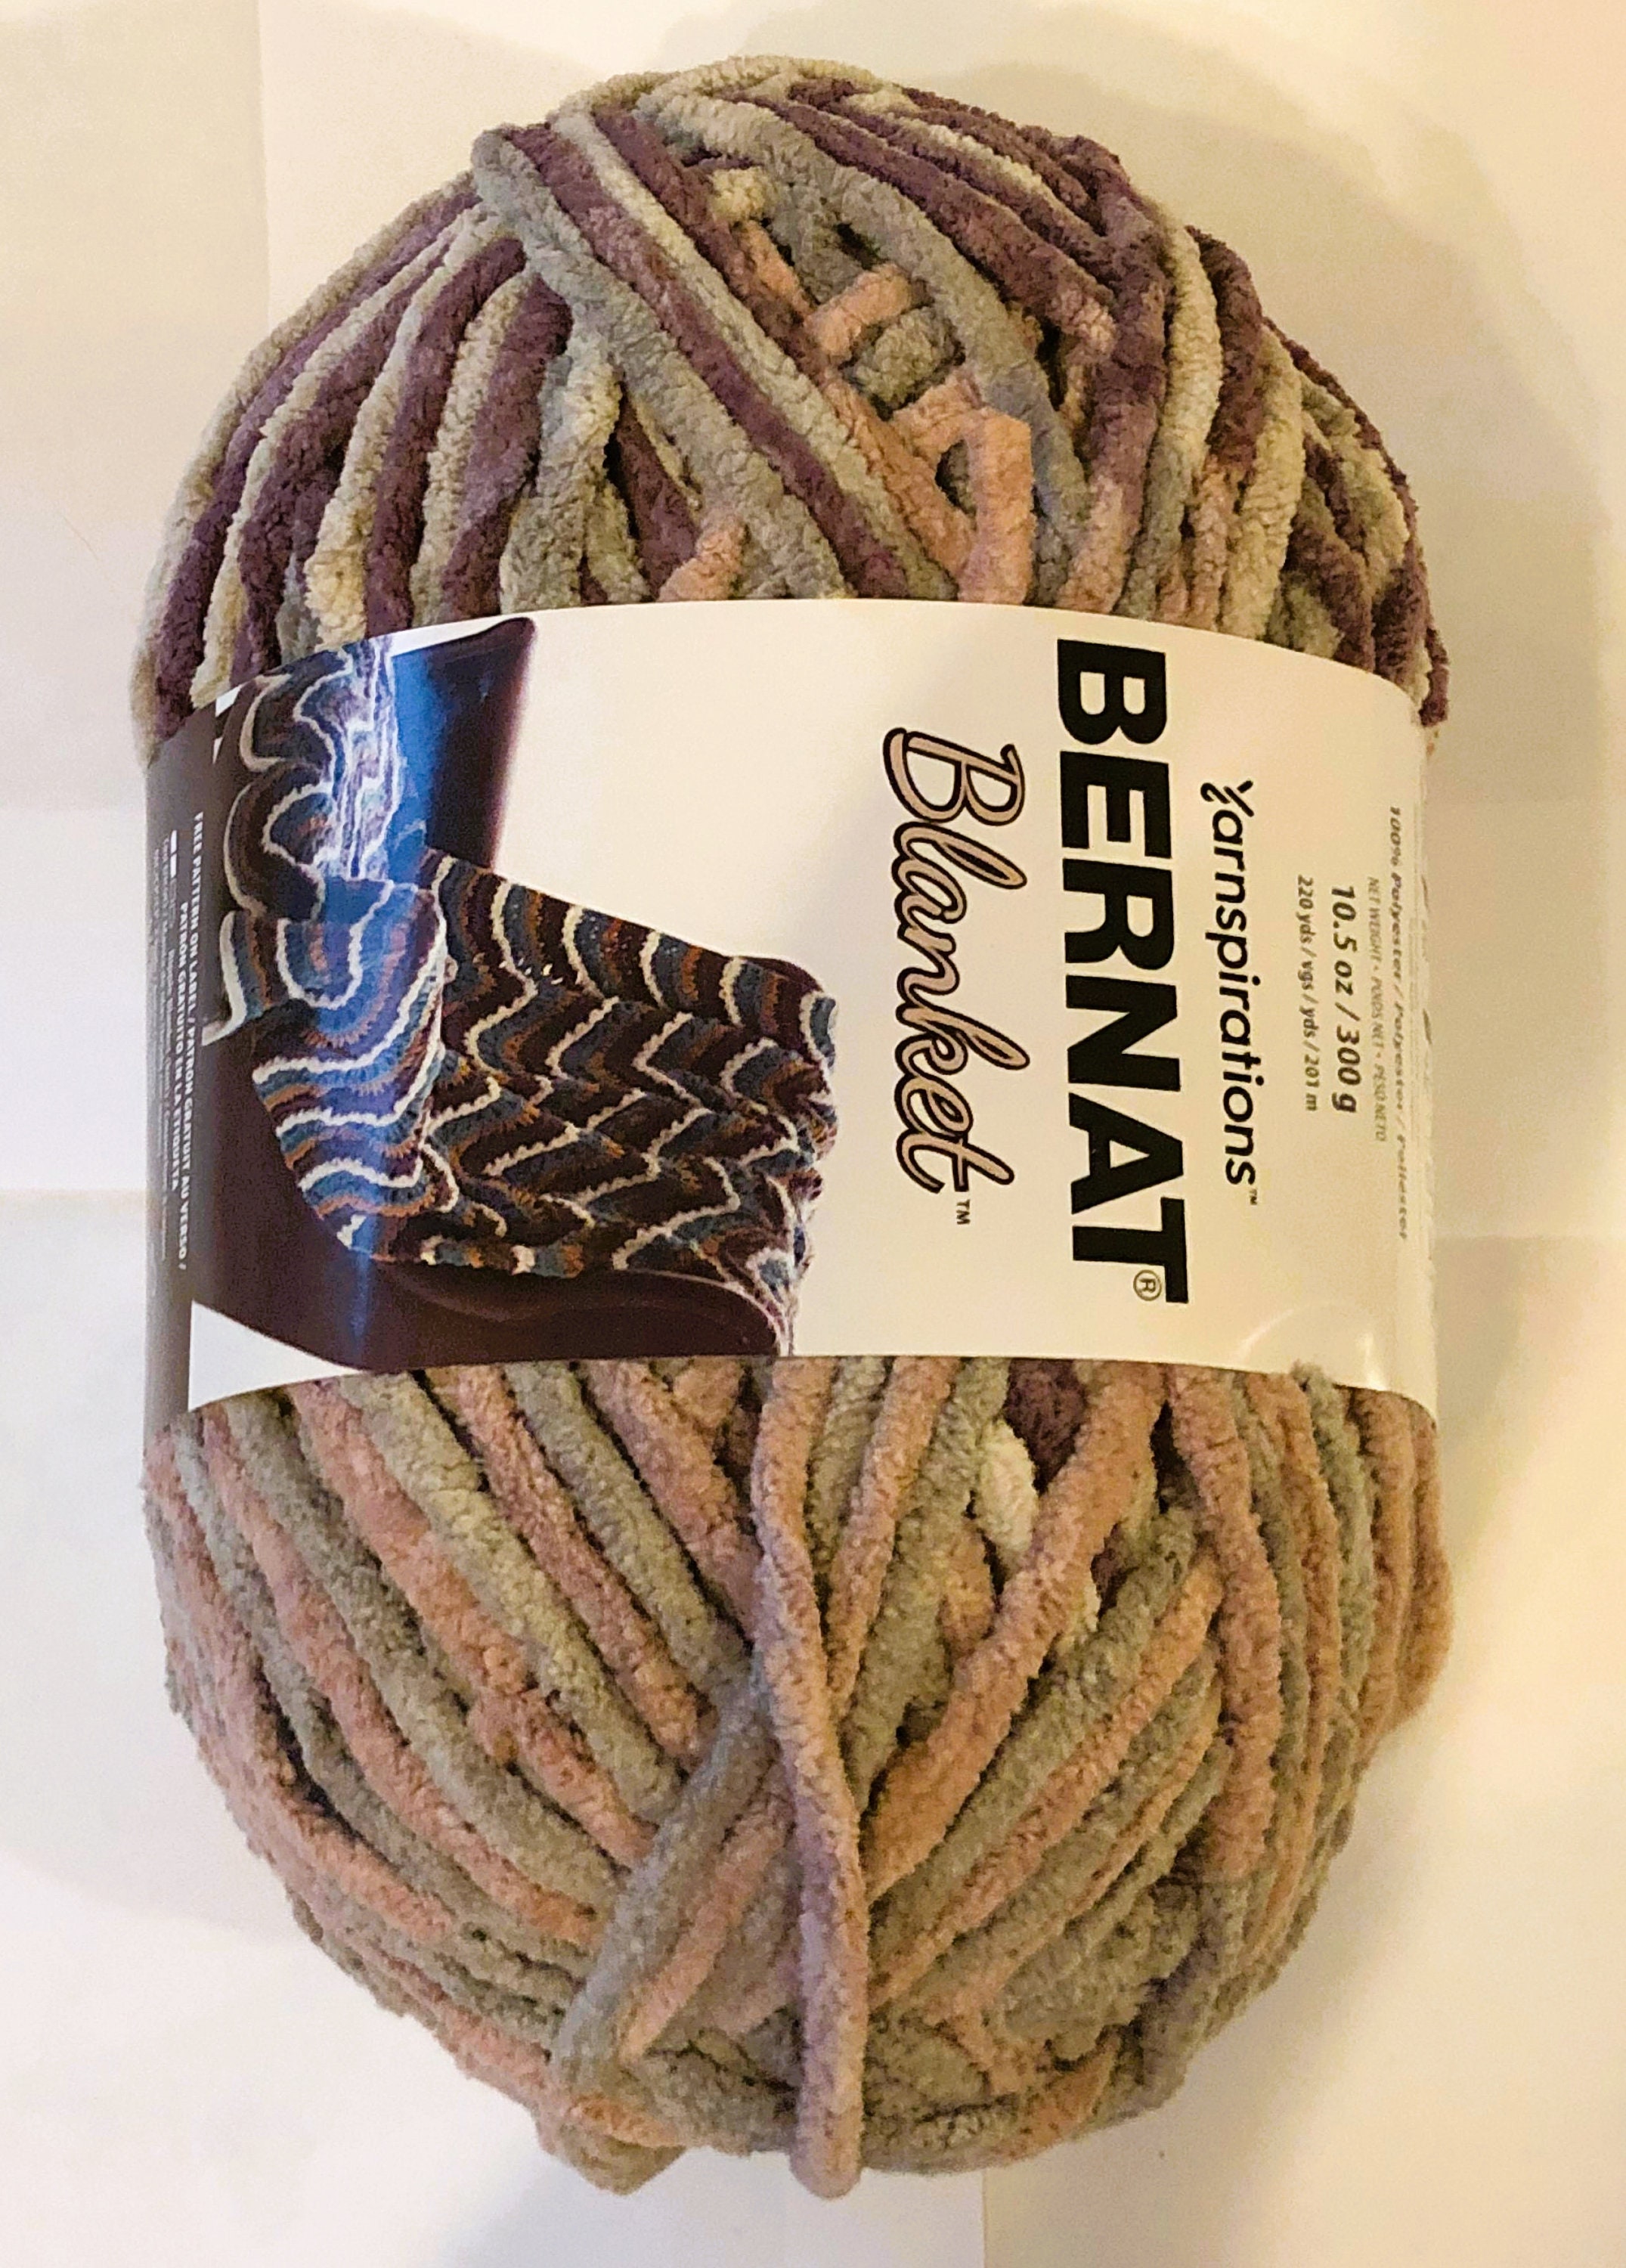 Bernat Blanket Purple Haze Yarn - 2 Pack of 300g/10.5oz - Polyester - 6  Super Bulky - 220 Yards - Knitting/Crochet